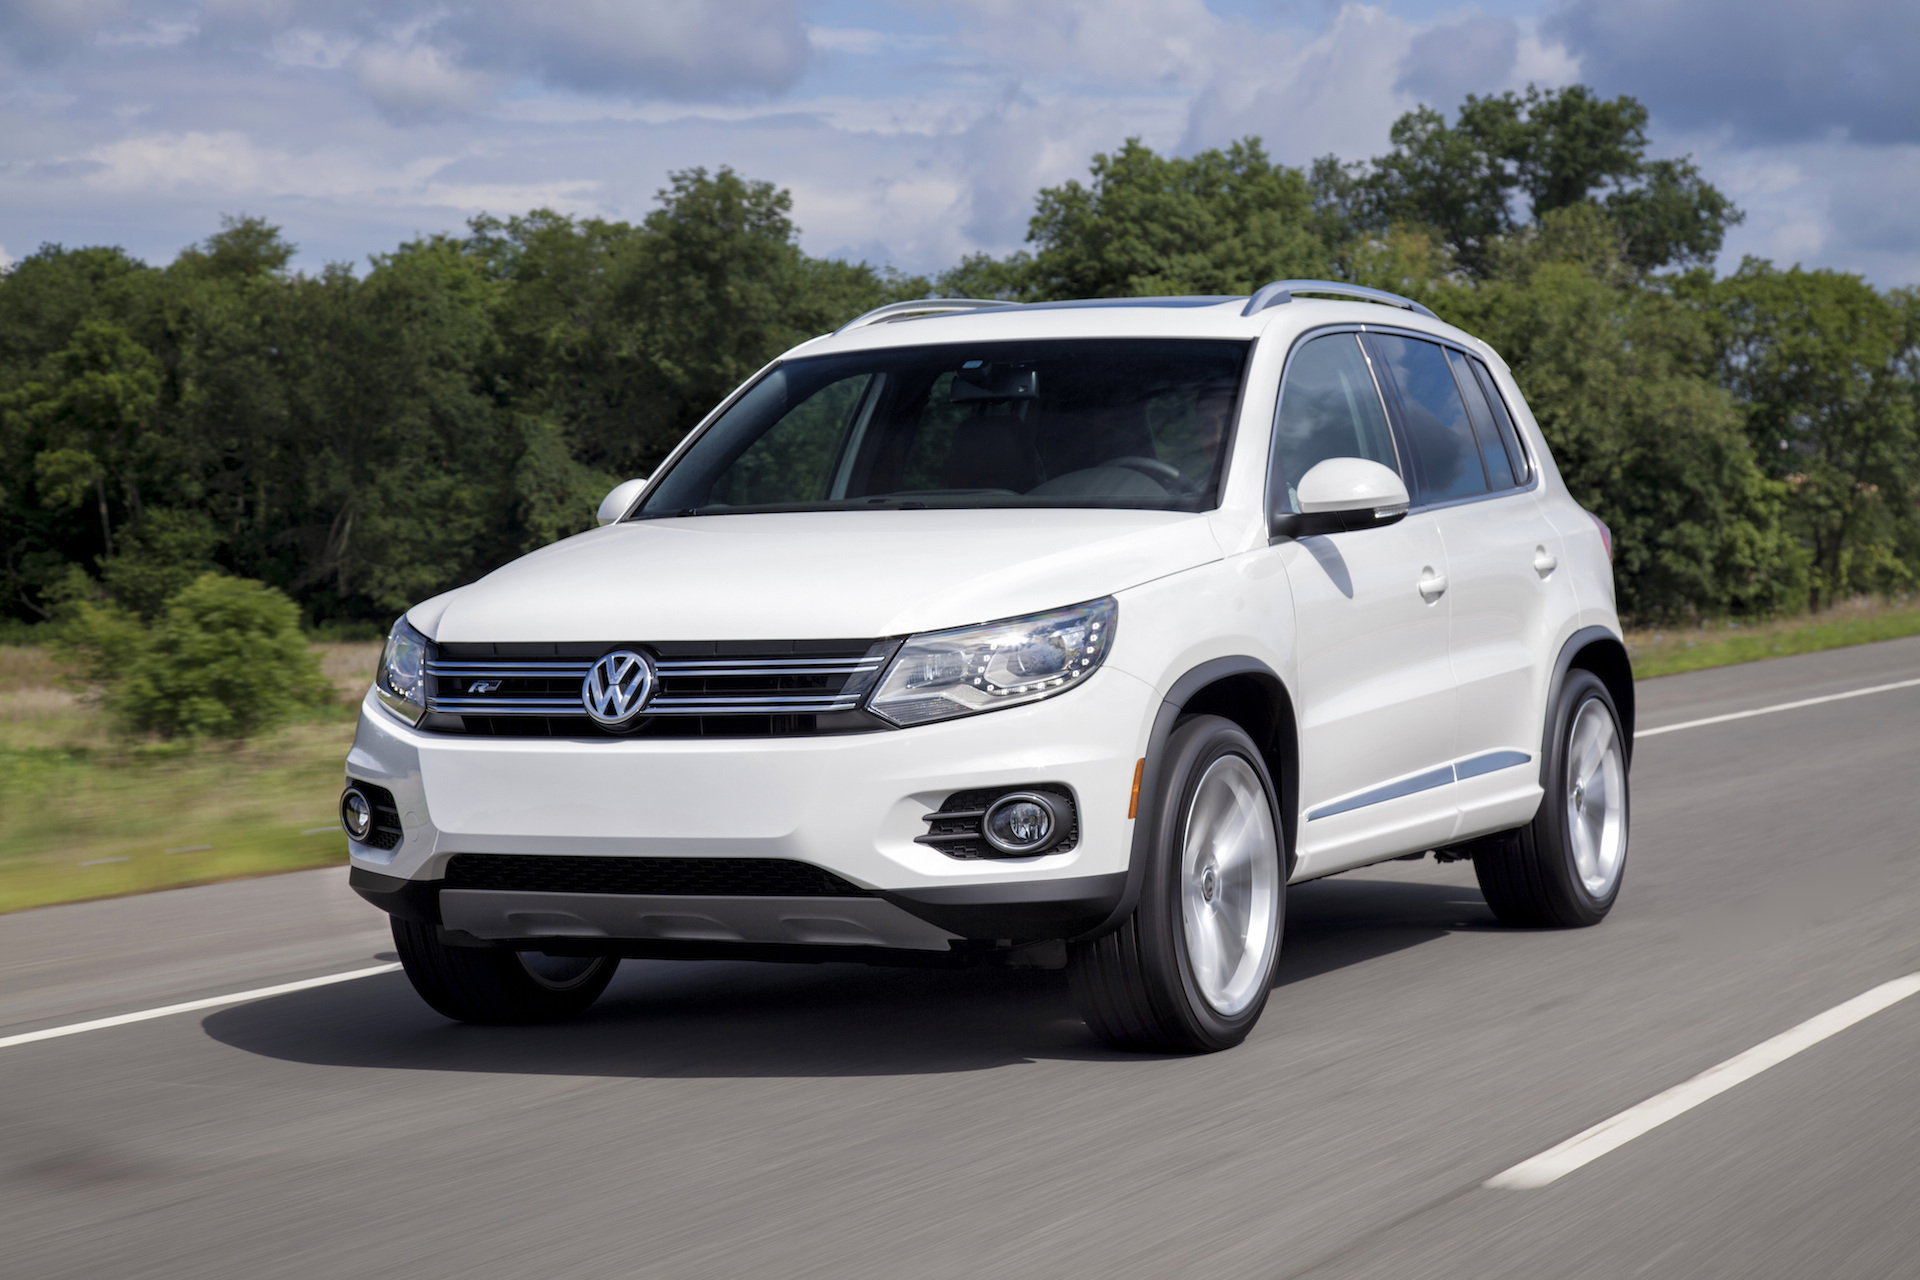 2016 Volkswagen Tiguan Vw Review Ratings Specs Prices